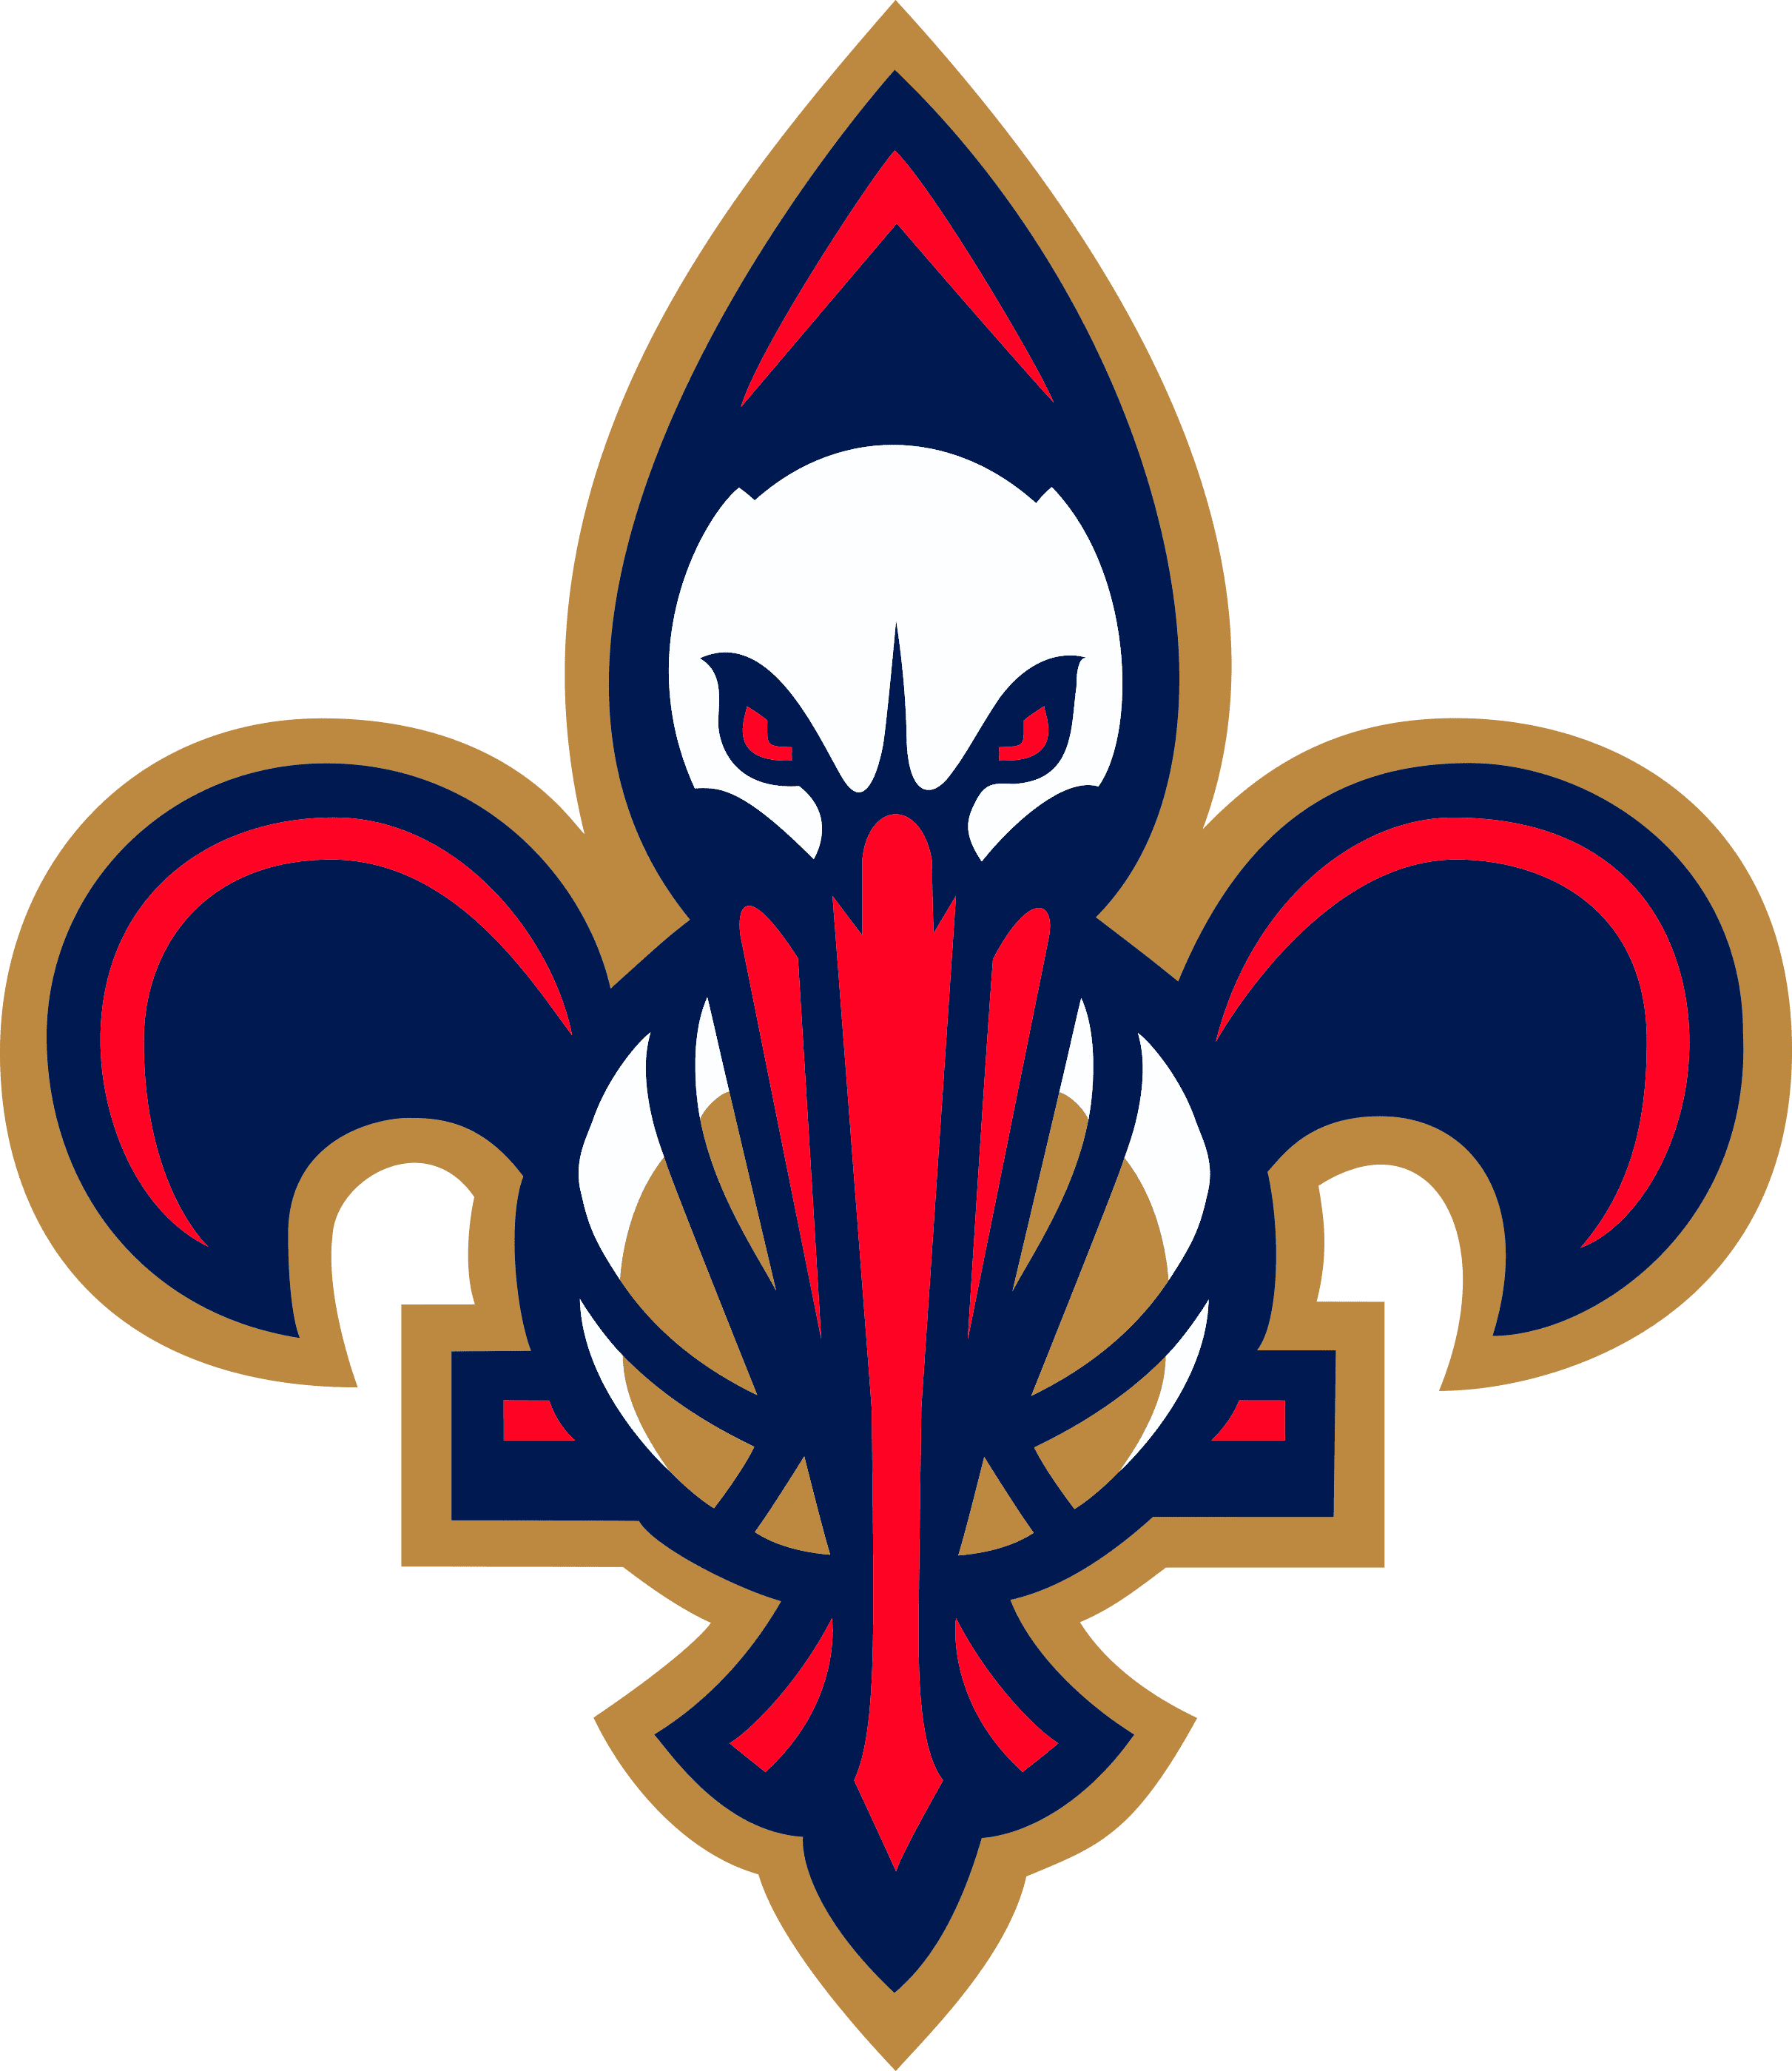 New Orleans Pelicans Logo PNG Transparent & SVG Vector - Freebie